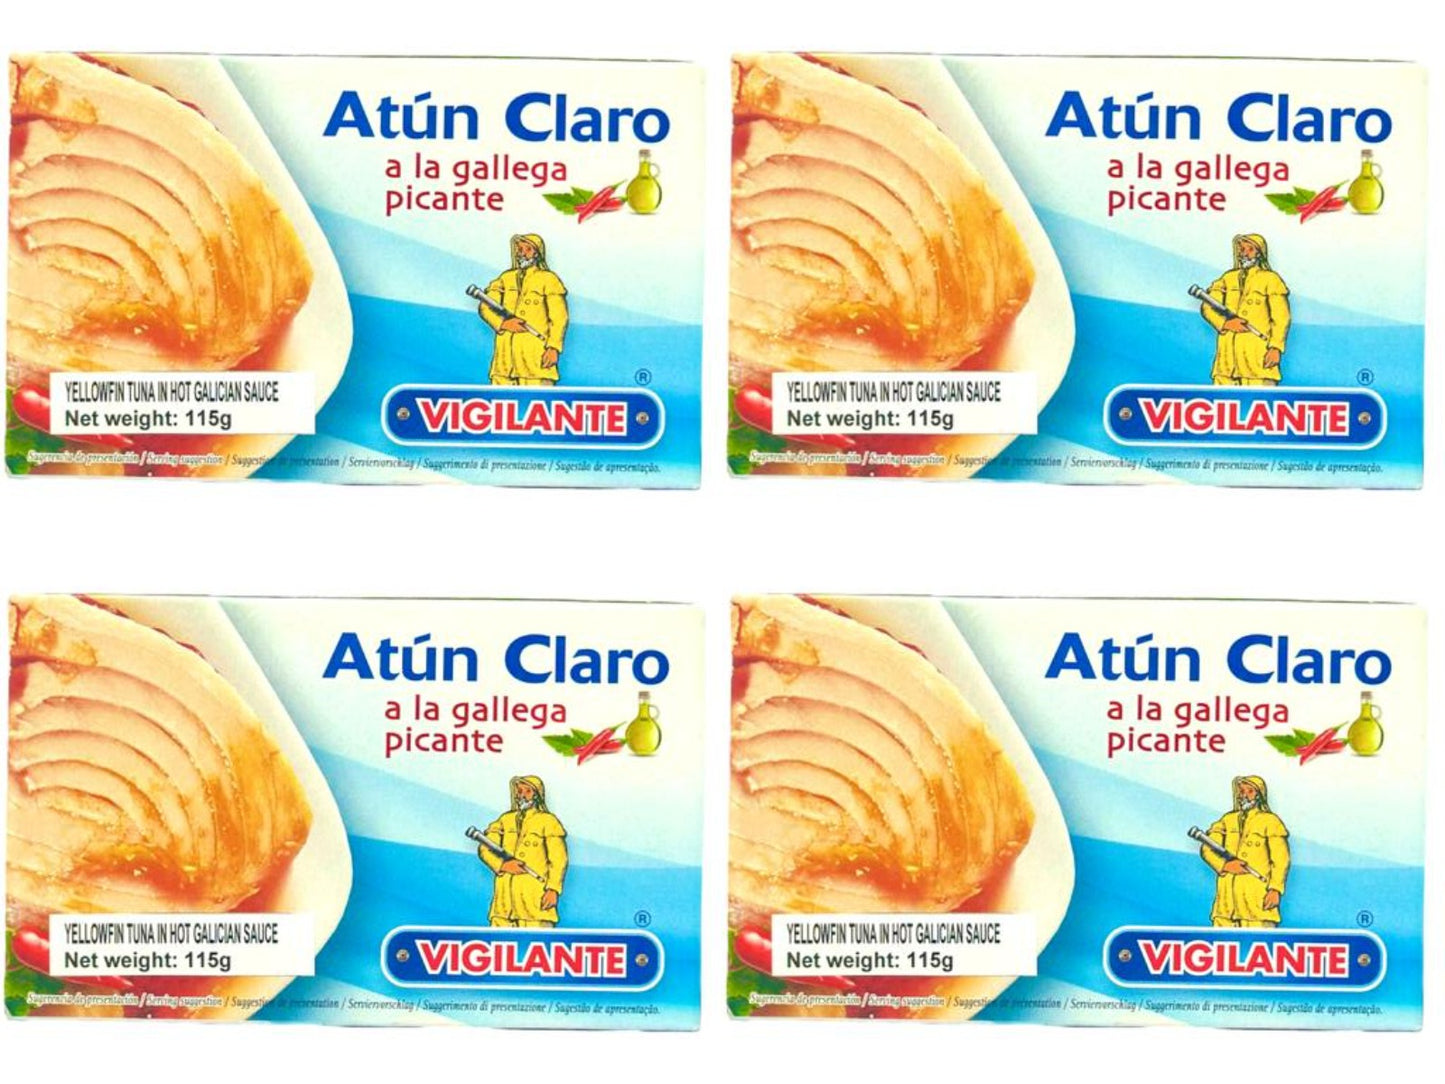 Vigilante Atun Claro a la Gallega Picante Spain - Spanish Yellowfin Tuna in Hot Galican Sauce 115g - 4 Pack Total 460g Best Before Jan 2025